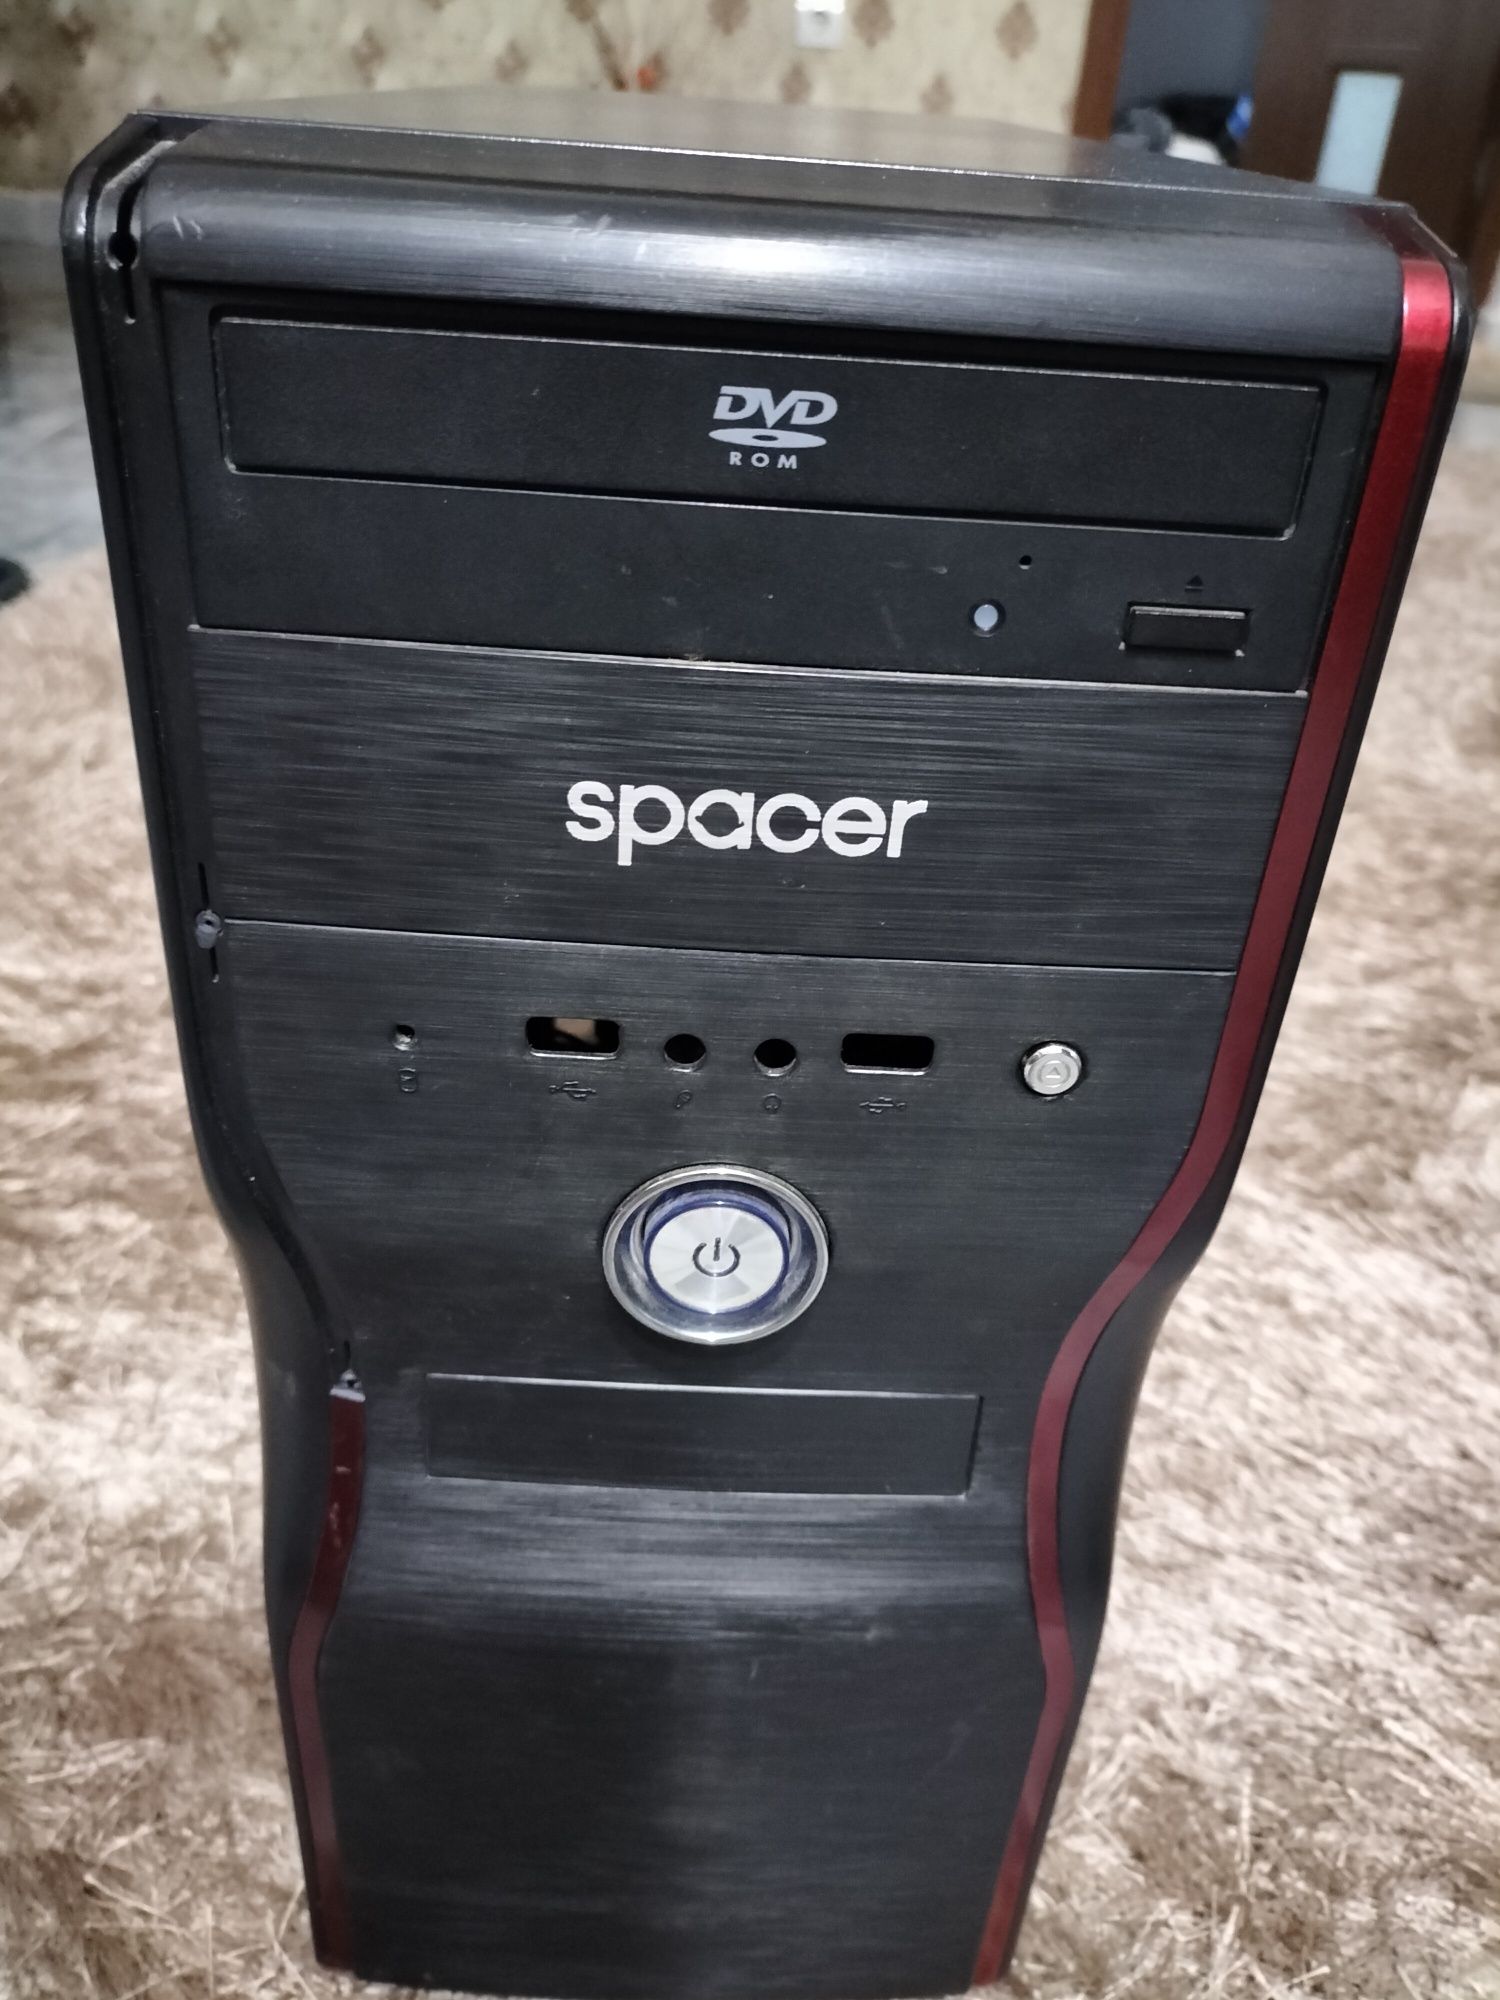 Calculator gaming cu monitor Acer și tastatură gaming Red dragon